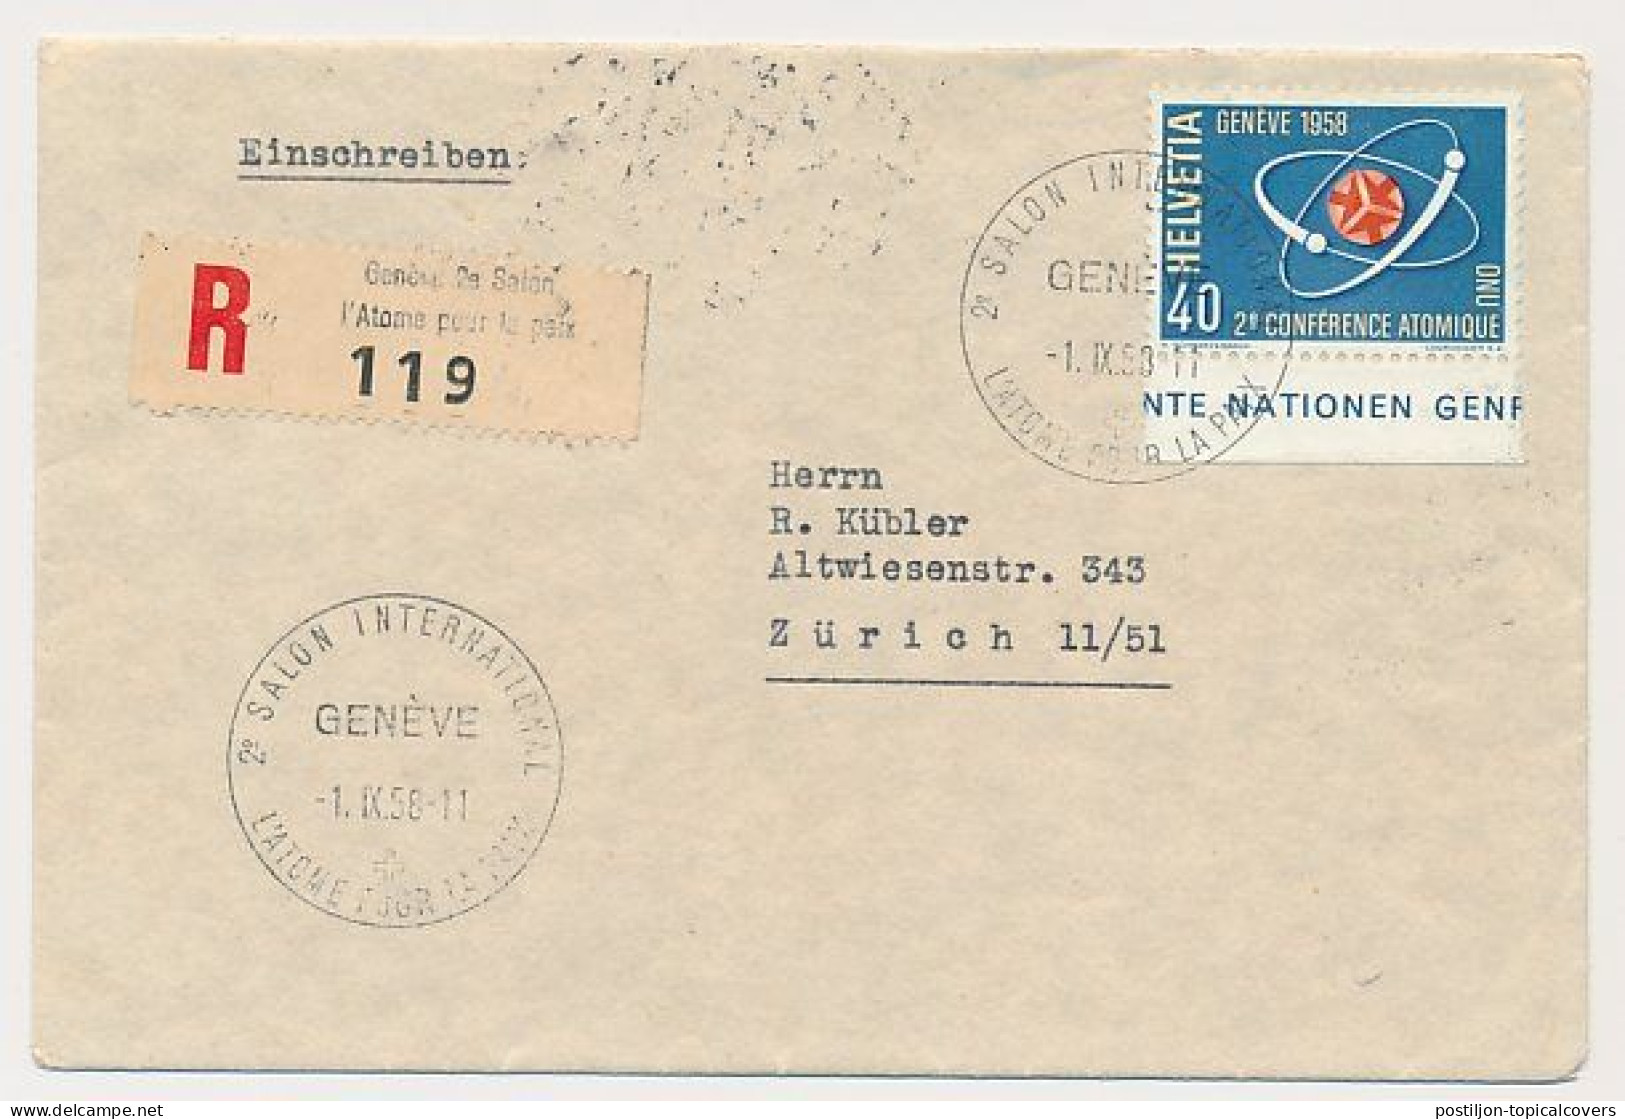 Registered Cover Geneve Switzerland 1958 - L'Atome  Pour La Paix - The Atom For Peace - Atom